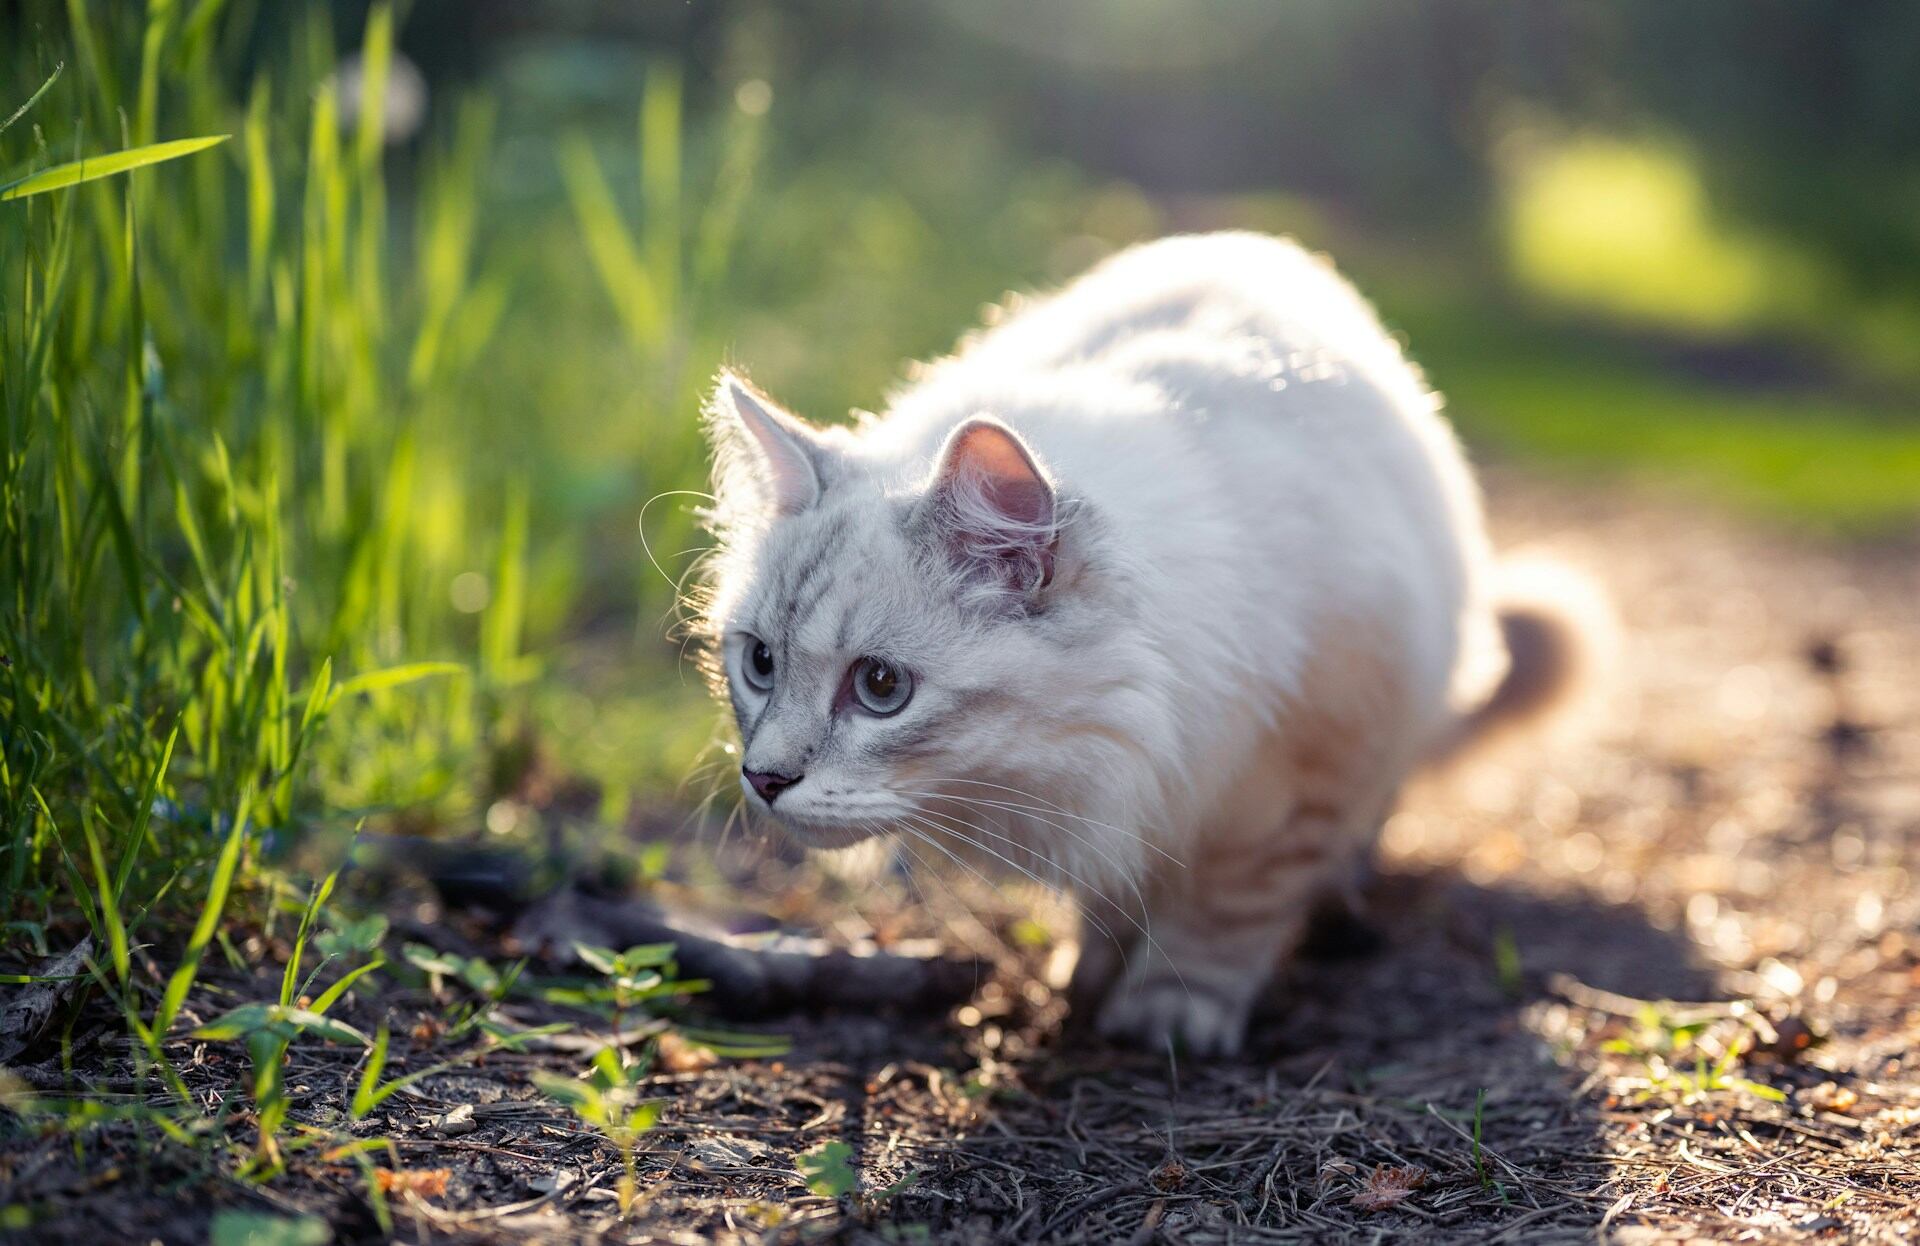 A white cat stalking prey near a green field